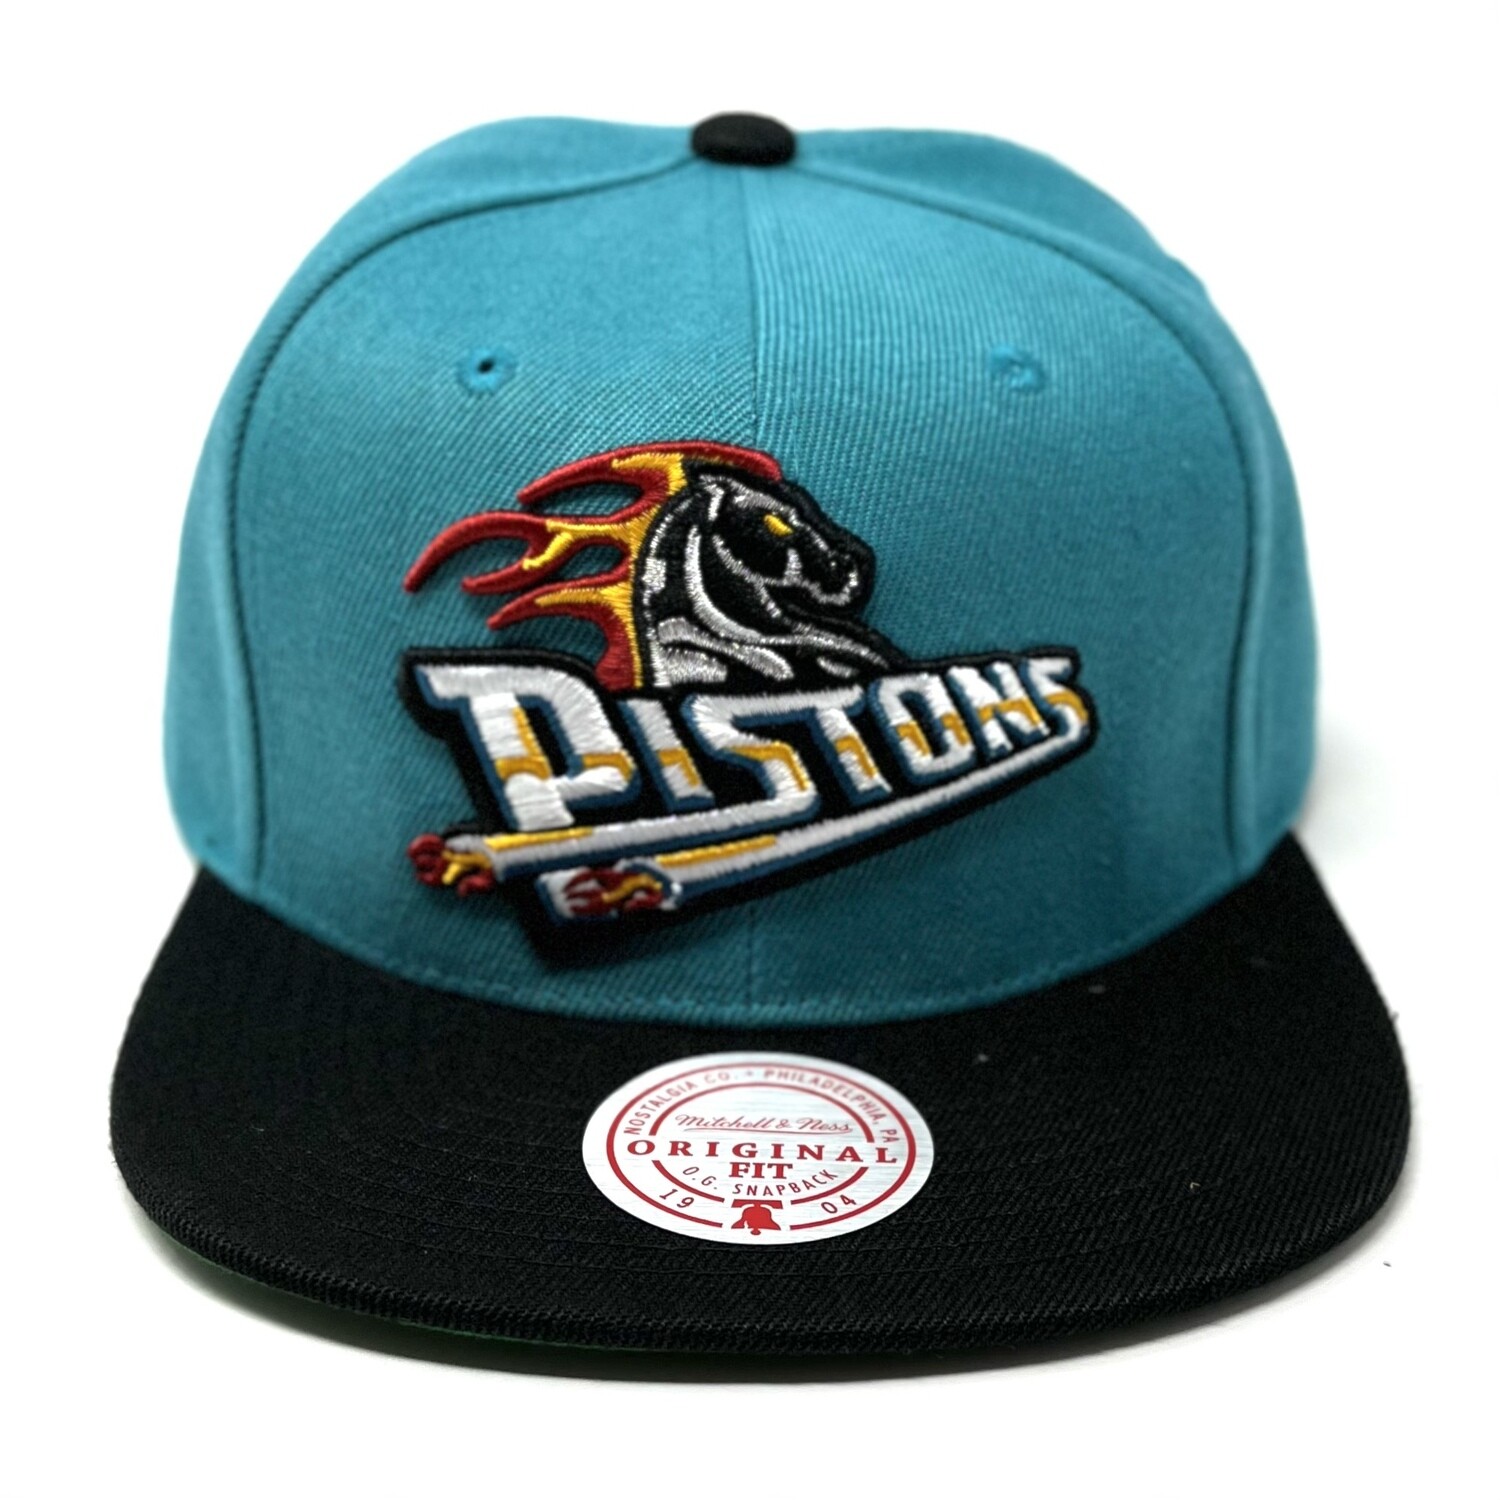 Men's Mitchell & Ness Heathered Gray/Black Detroit Pistons Underpop Snapback Hat